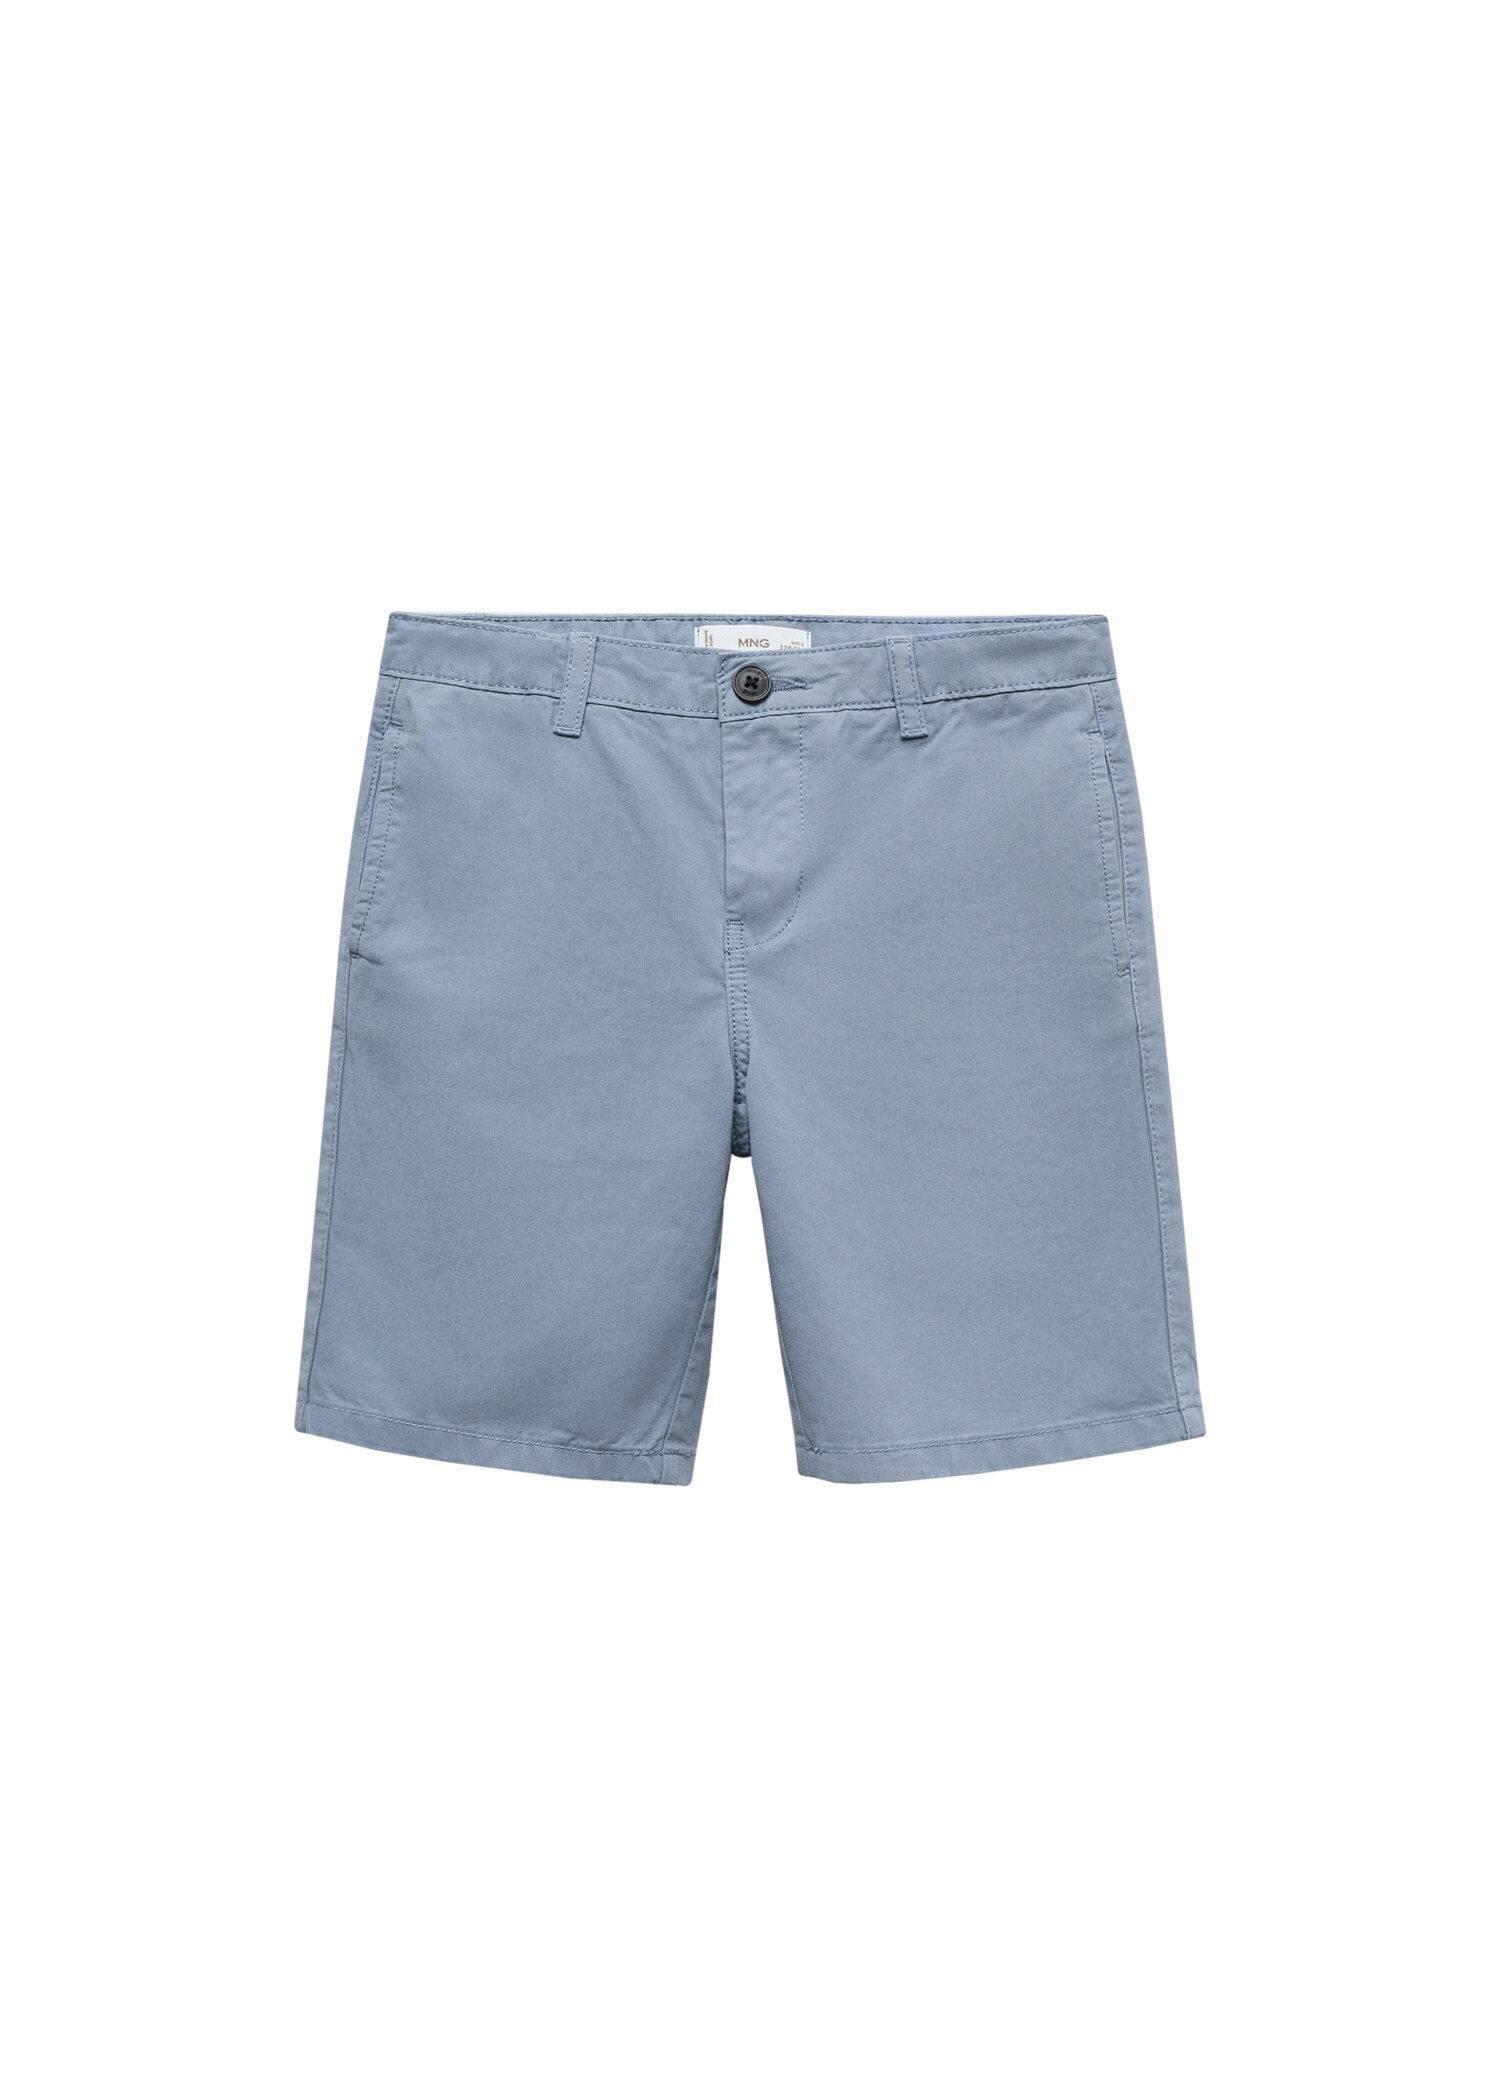 Mango - Blue Cotton Bermuda Shorts, Kids Boys